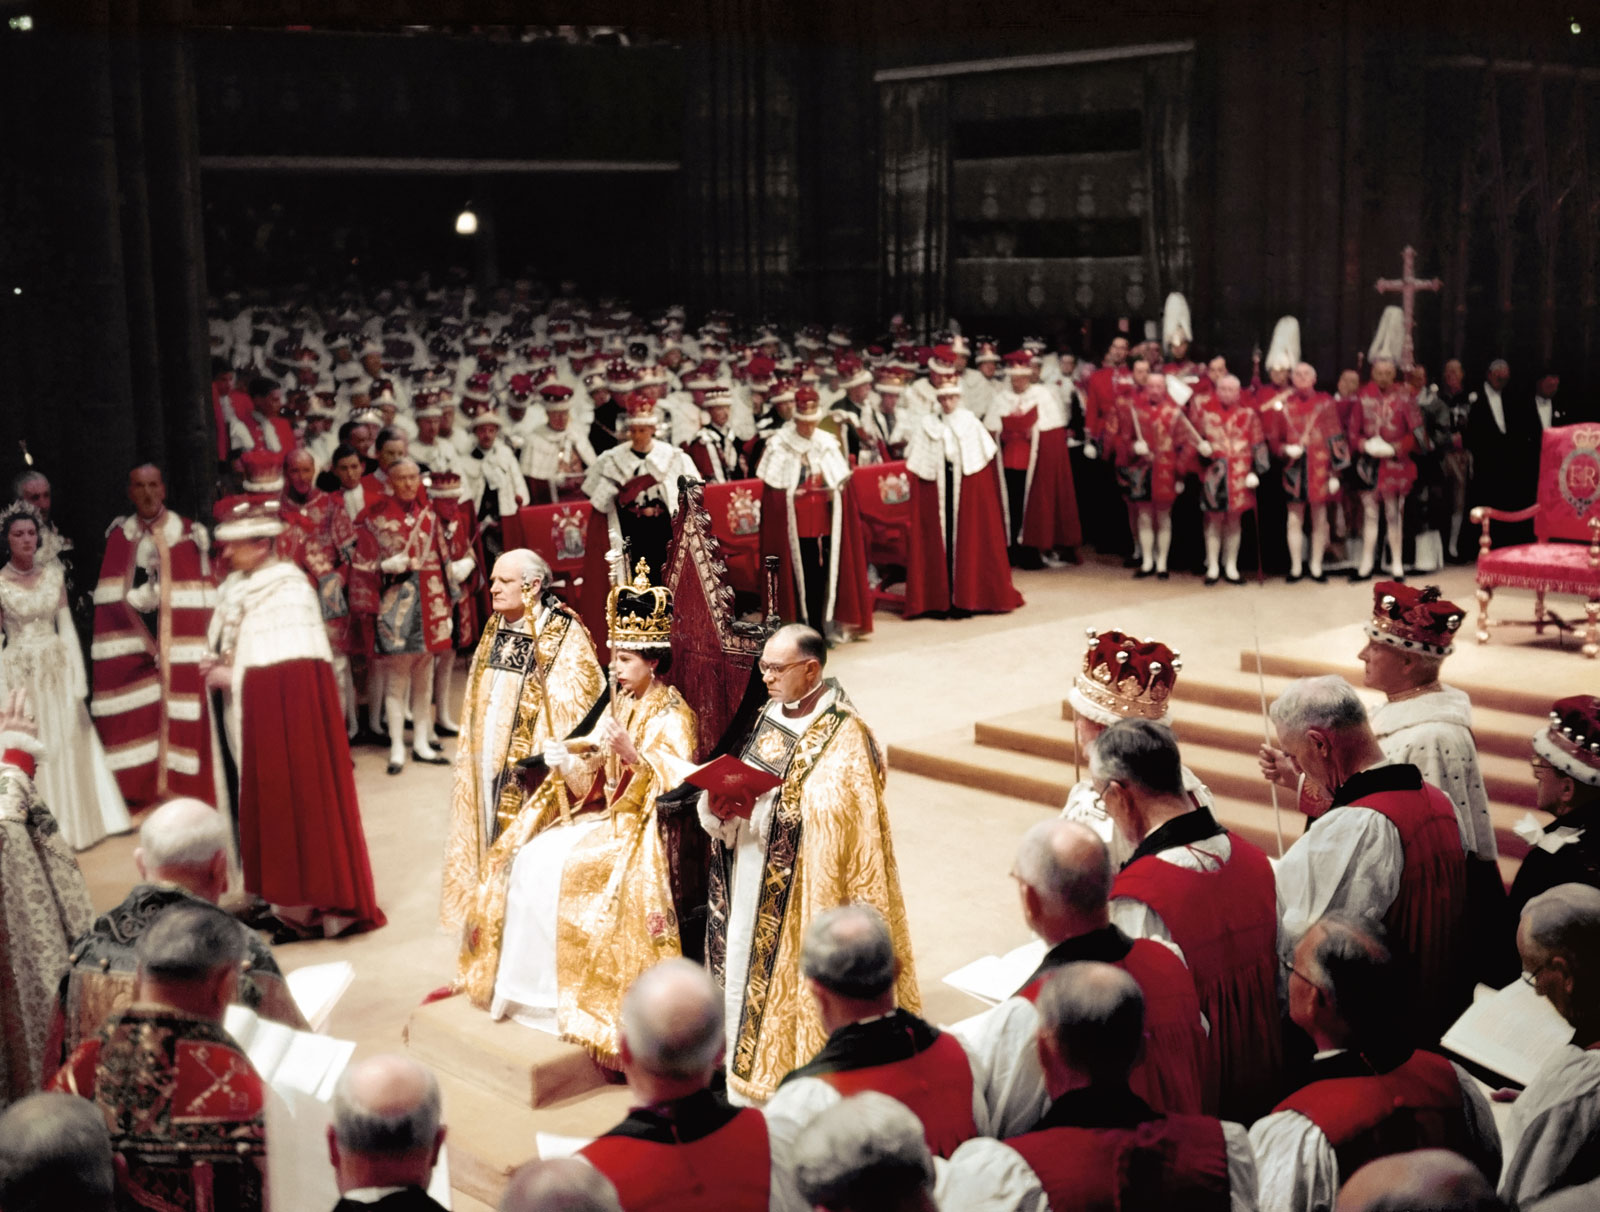  Bettmann/Corbis // Caption: Η τελετή στέψης της νέας Βασίλισσας στο Αβαείο του Westminster, 1953 //Photo: ανώνυμος